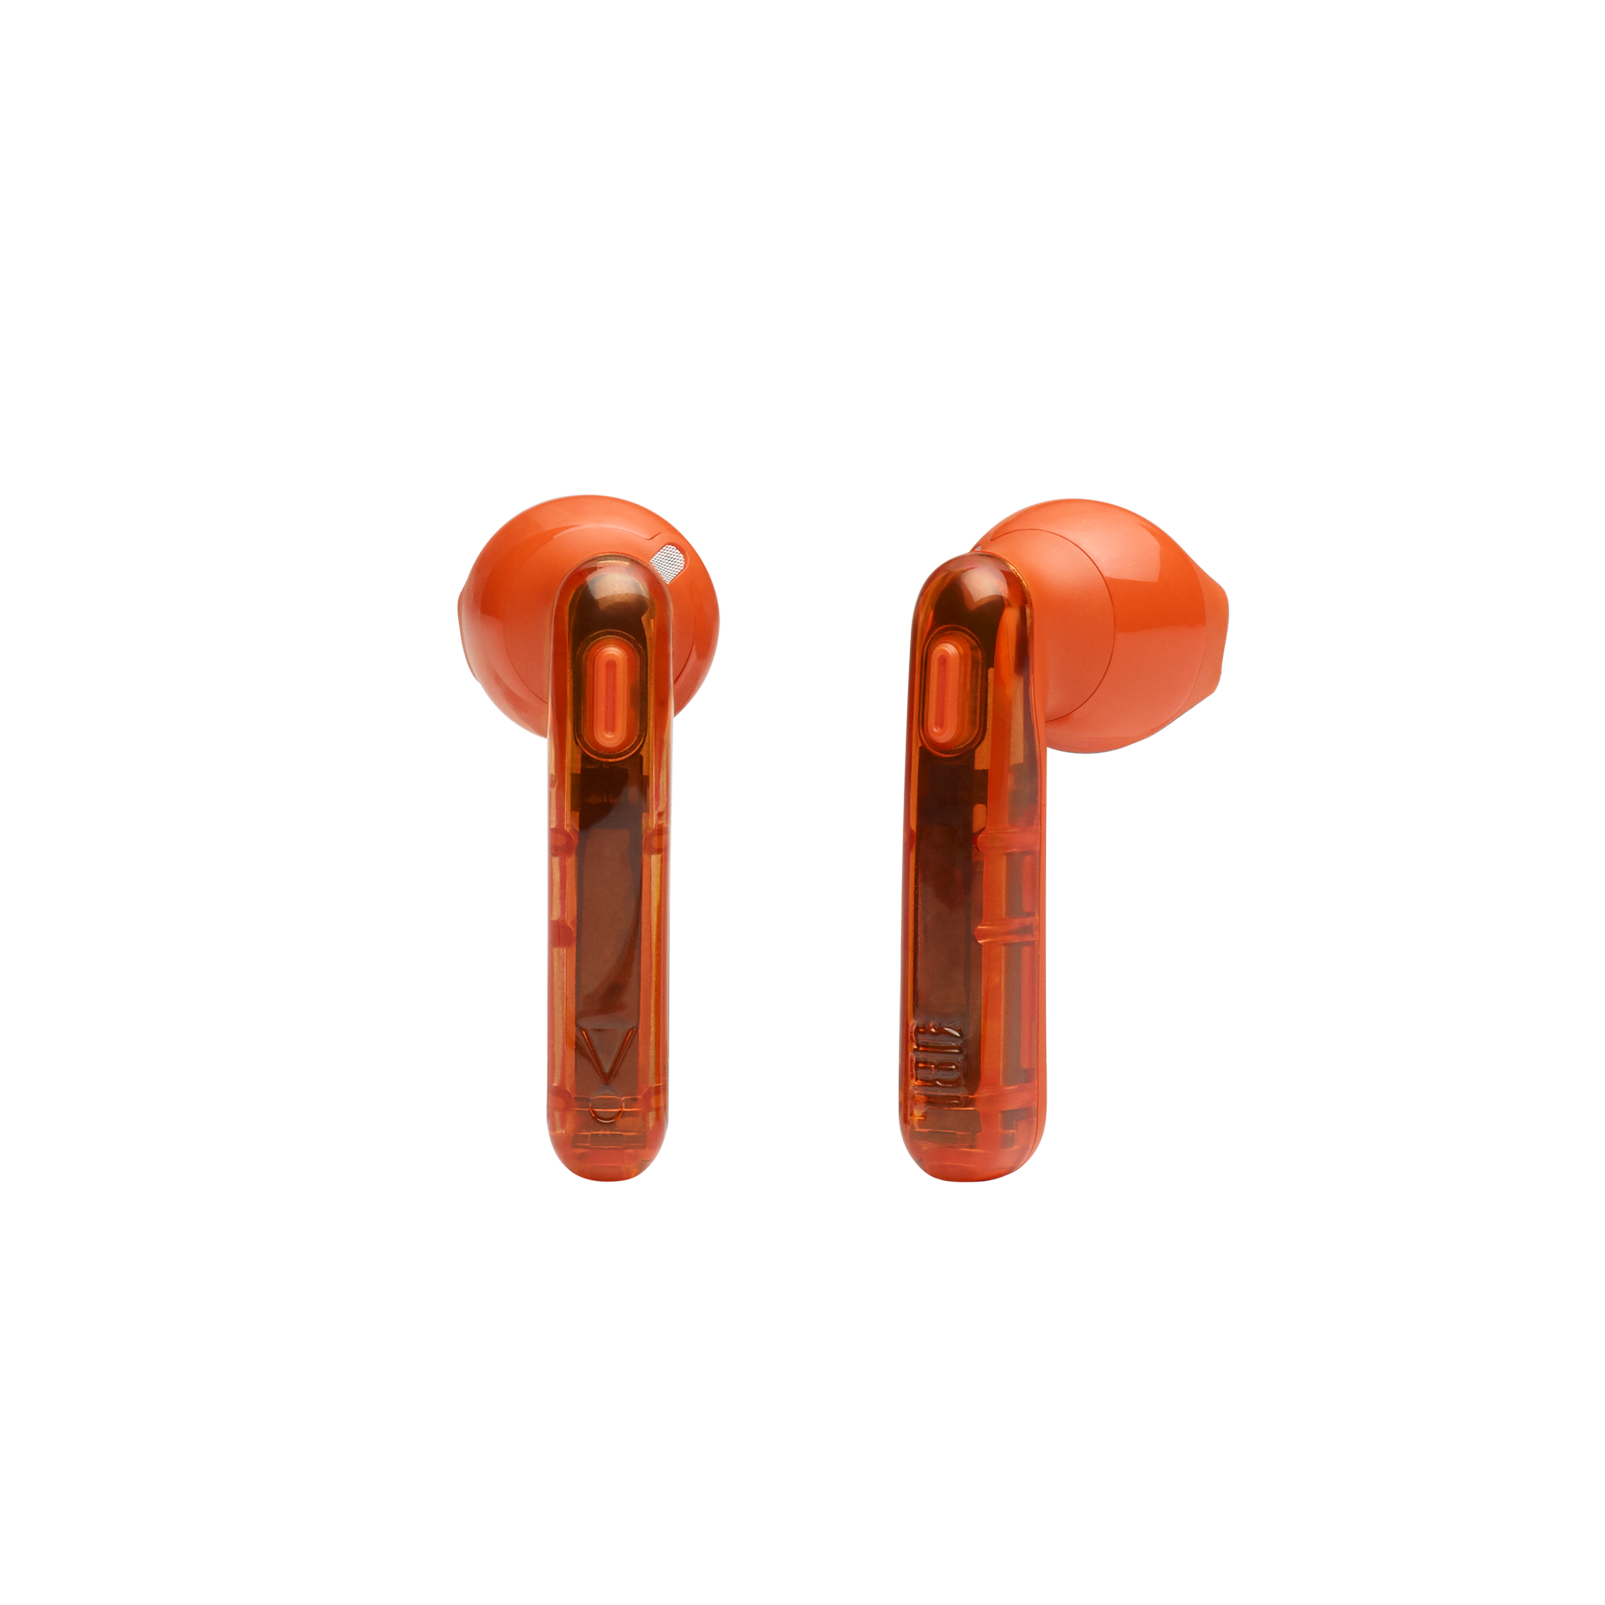 Tune 225TWS Ghost Edition - Orange - True wireless earbud headphones - Detailshot 2